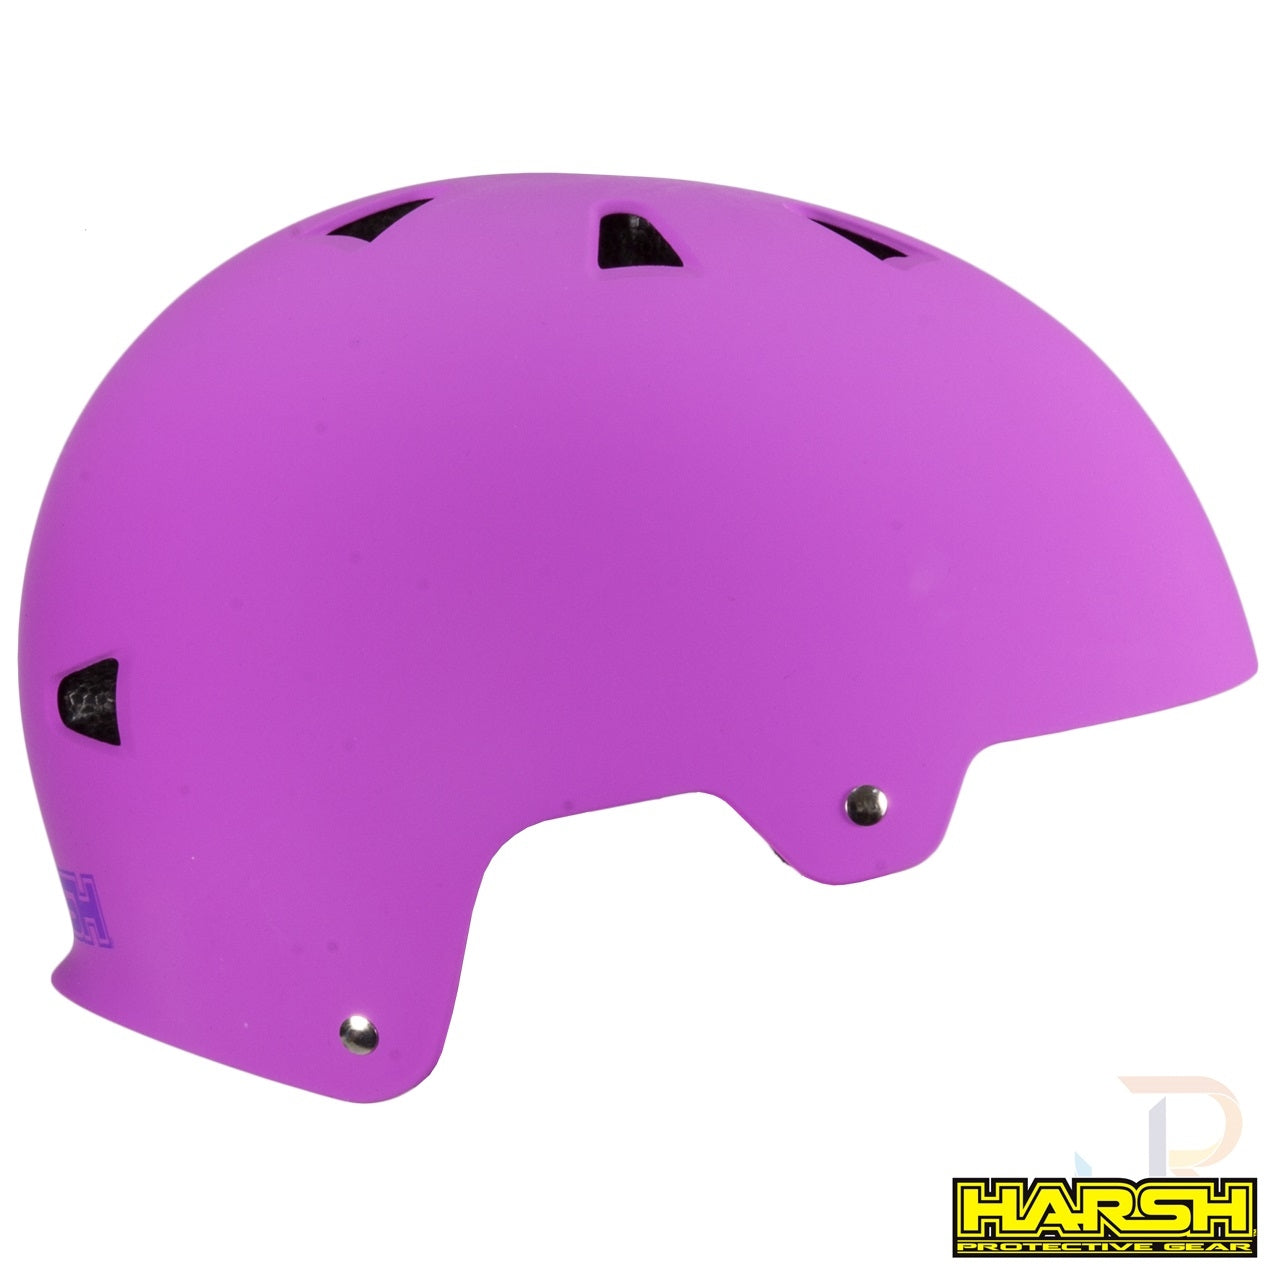 Harsh ABS Skate / Scooter Helmet - Pink - Side